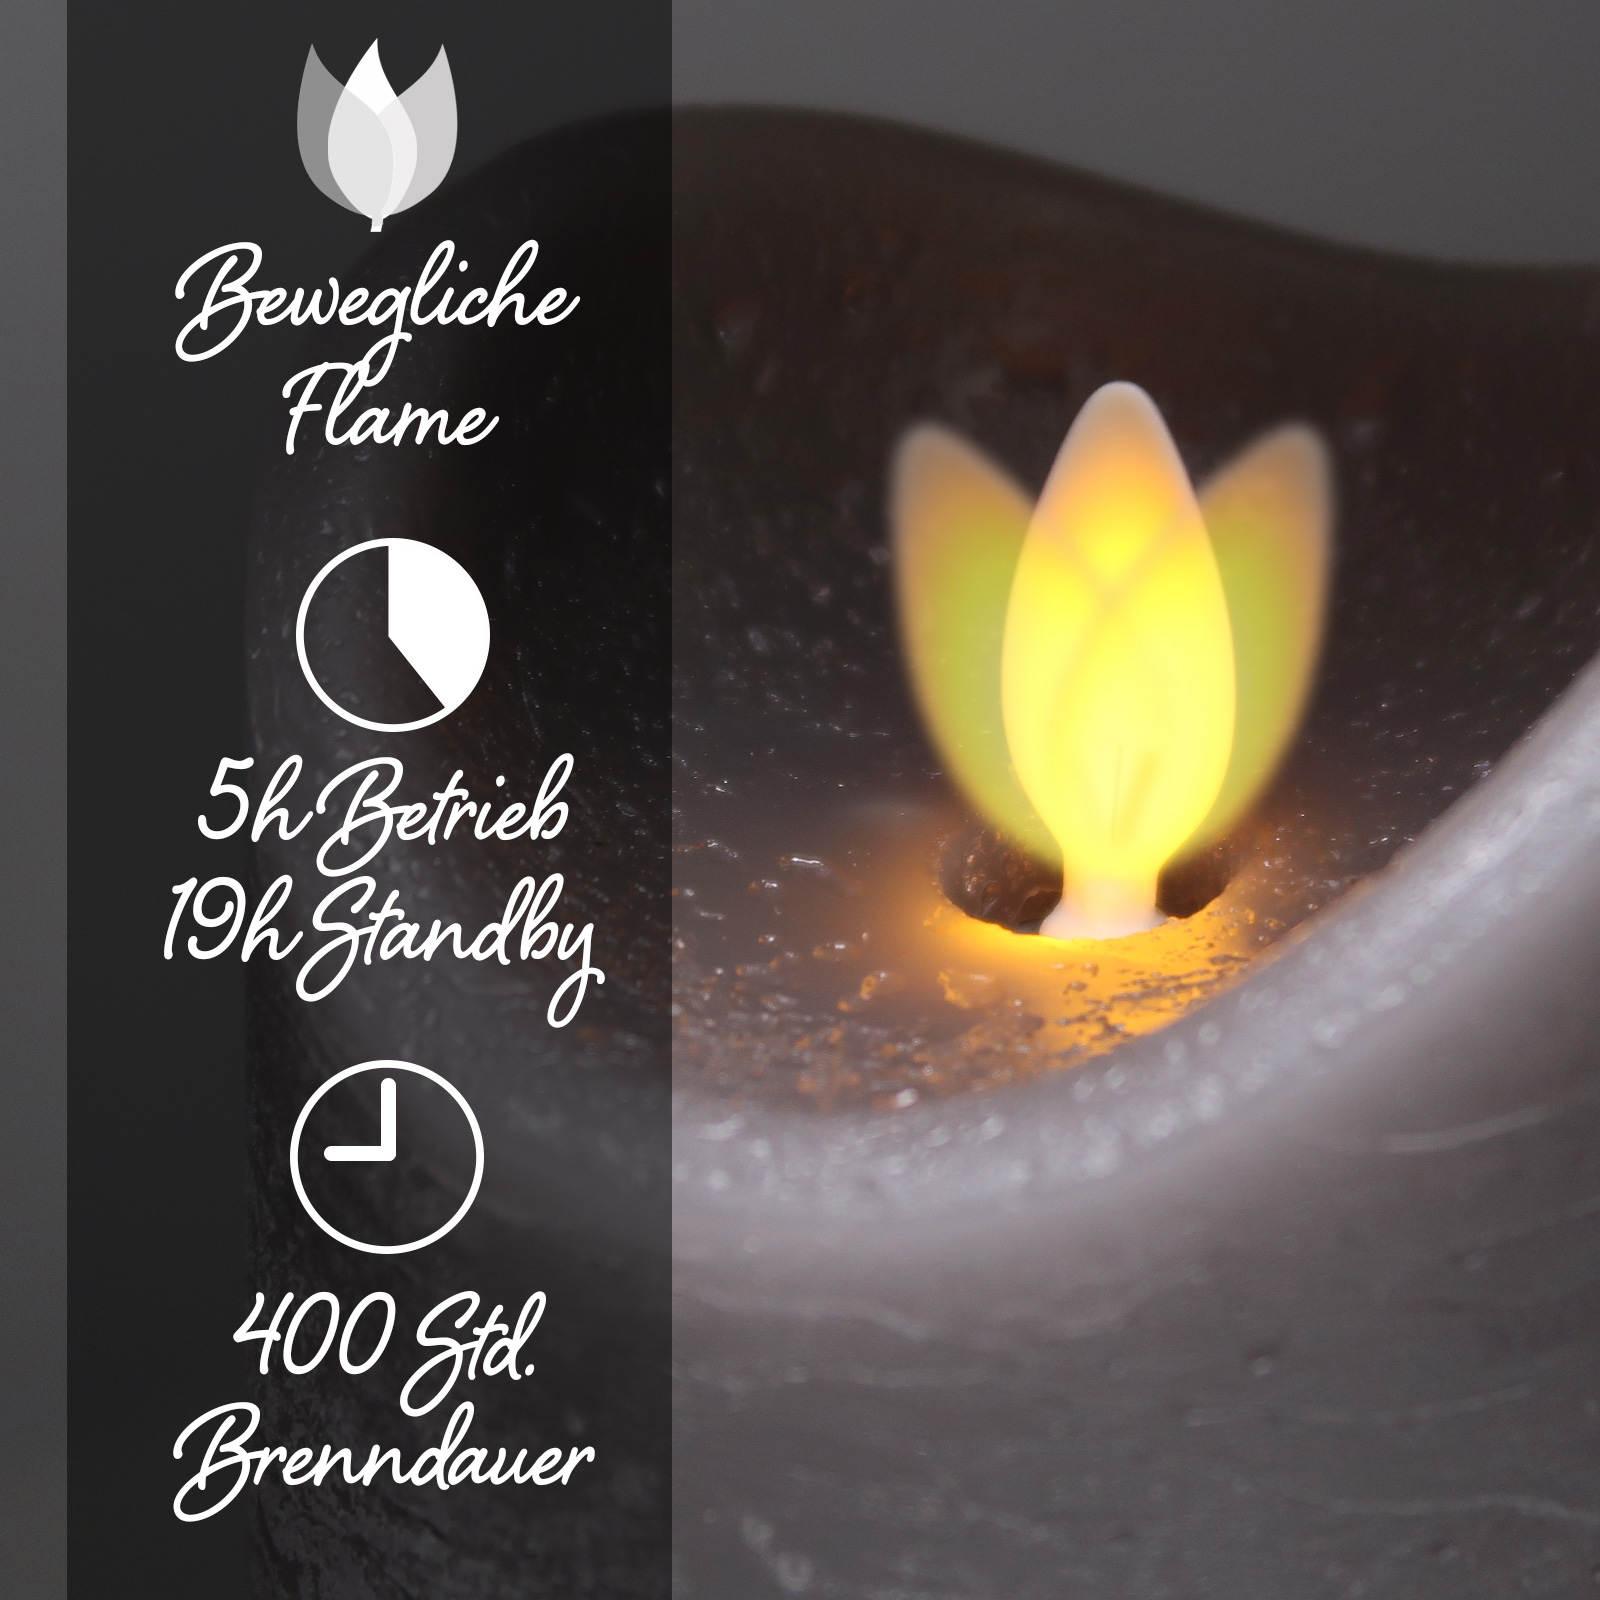 Tronje, LED-Echtwachskerze 3er Set - 13/15/18cm Grau Rustik mit Fernbedienung - Kerzenlichtsimulation